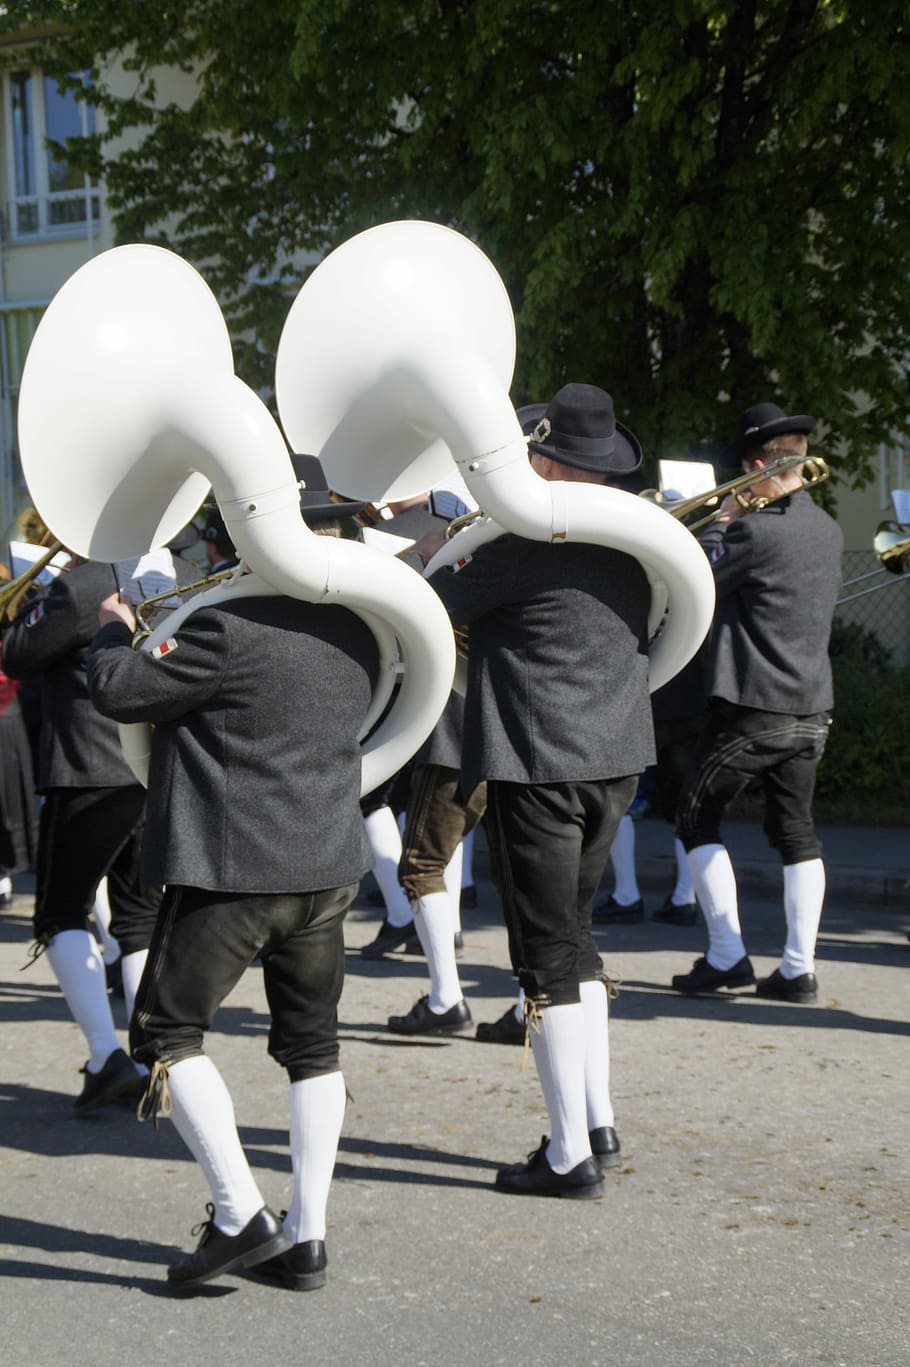 Brass Band, Marching, Costume, Bavarian, banda de música, capilla, festival callejero, desfile, instrumento, música